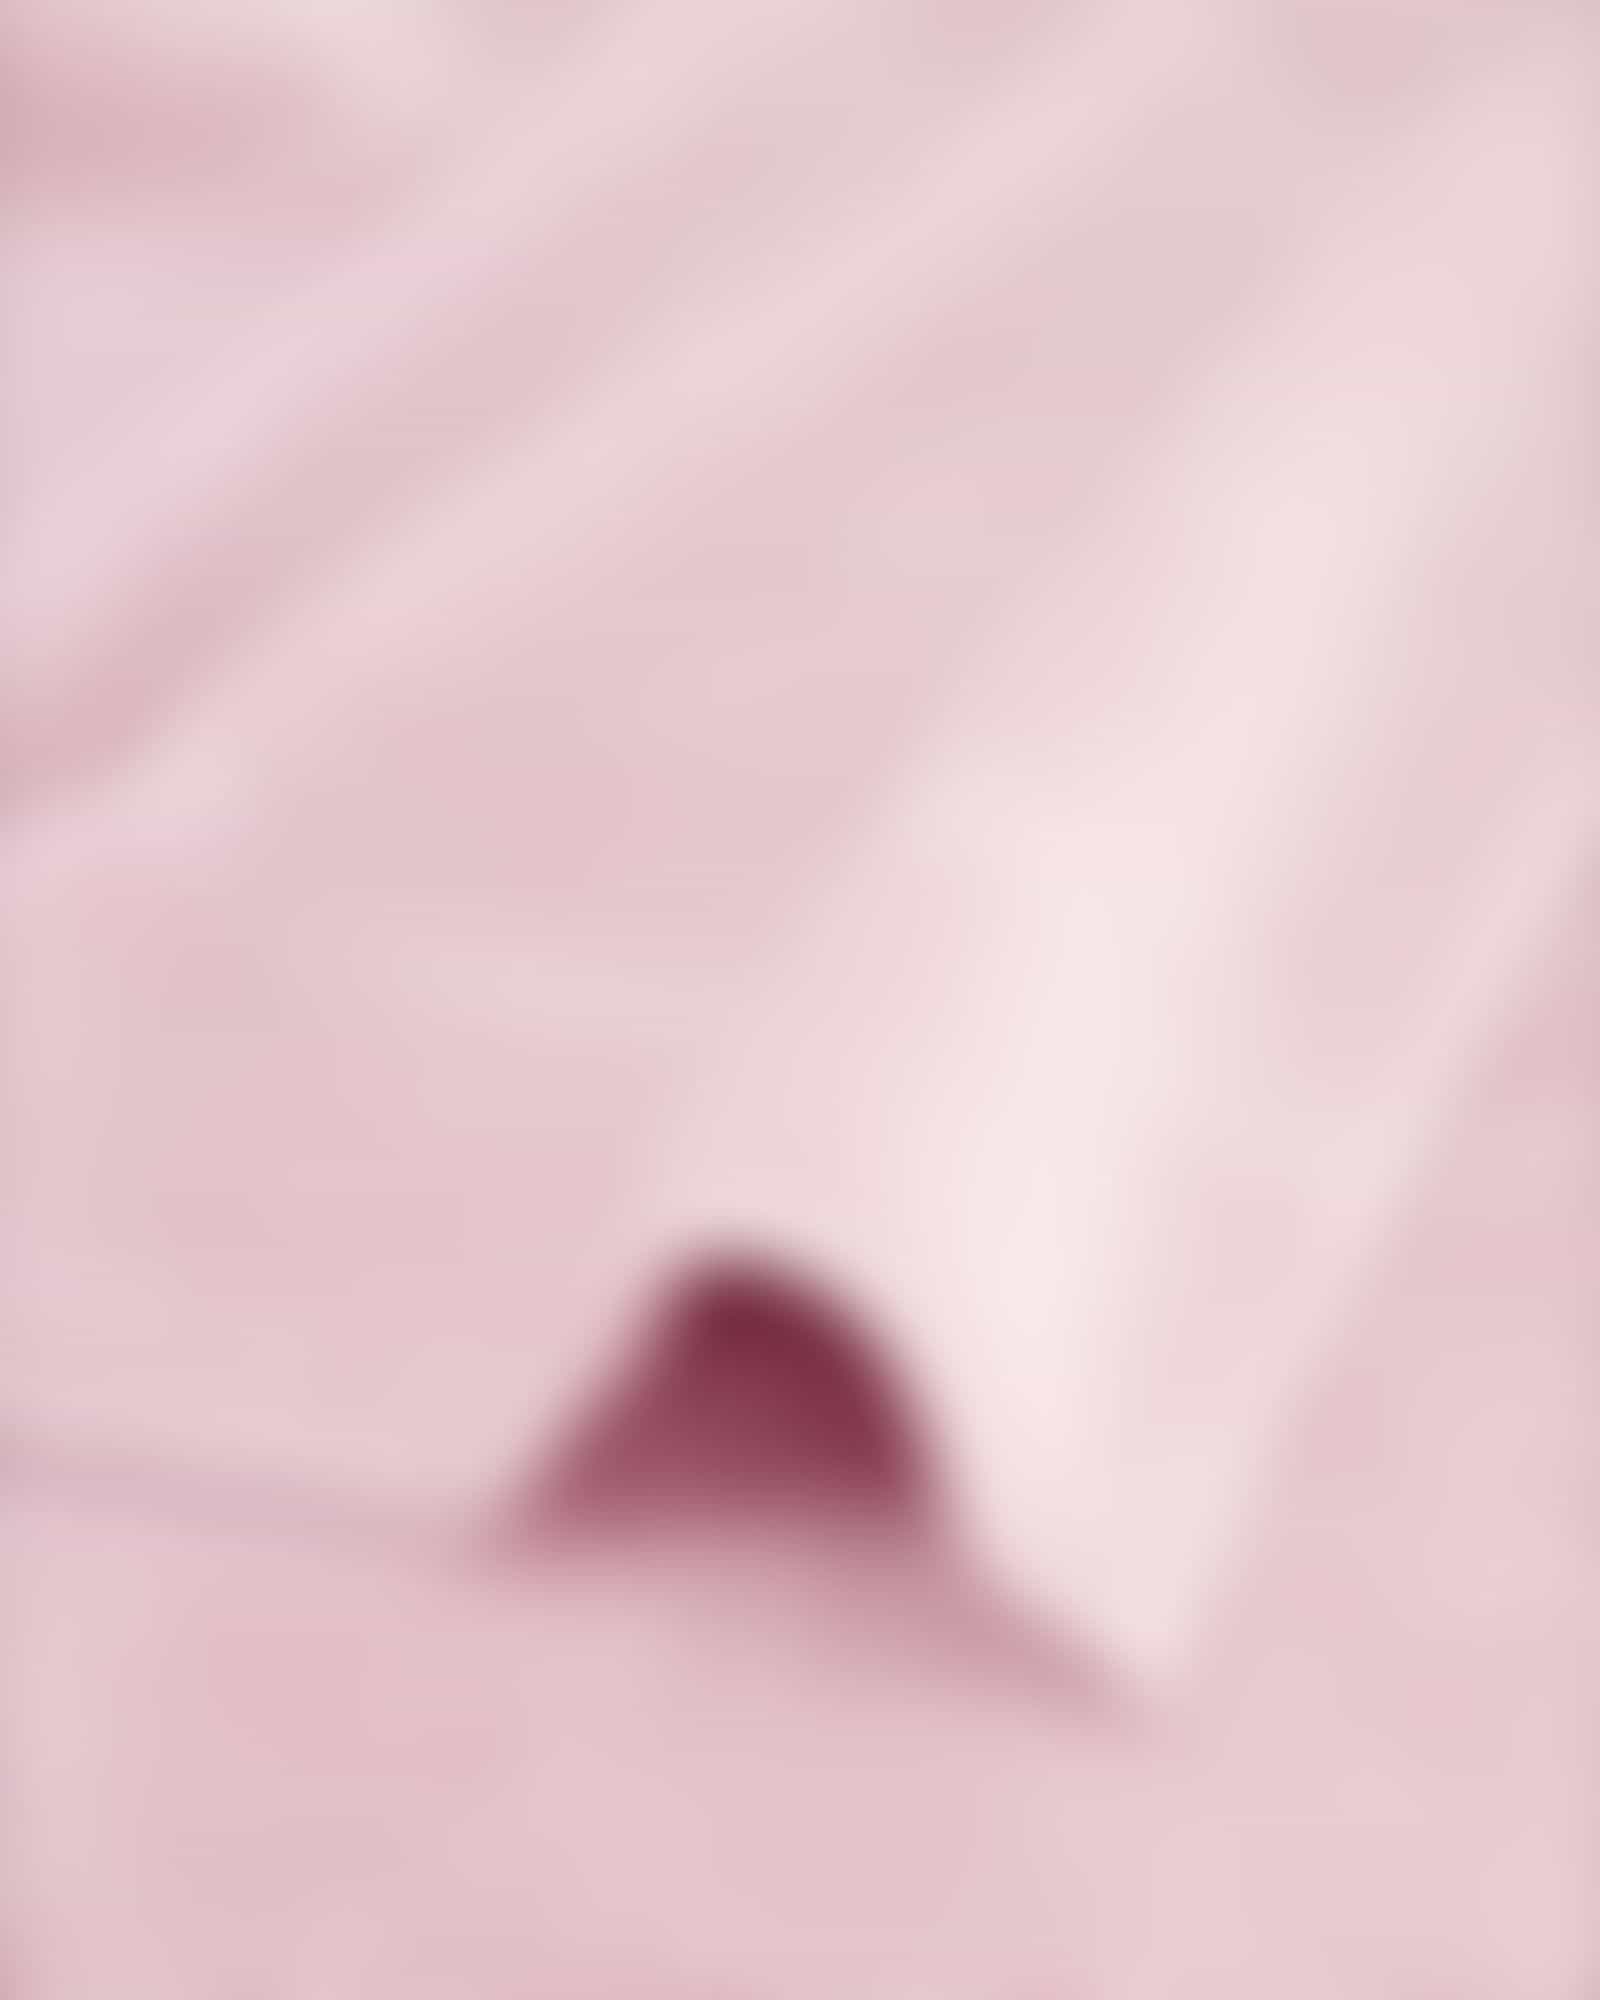 Vossen Handtücher Belief - Farbe: sea lavender - 3270 - Duschtuch 67x140 cm